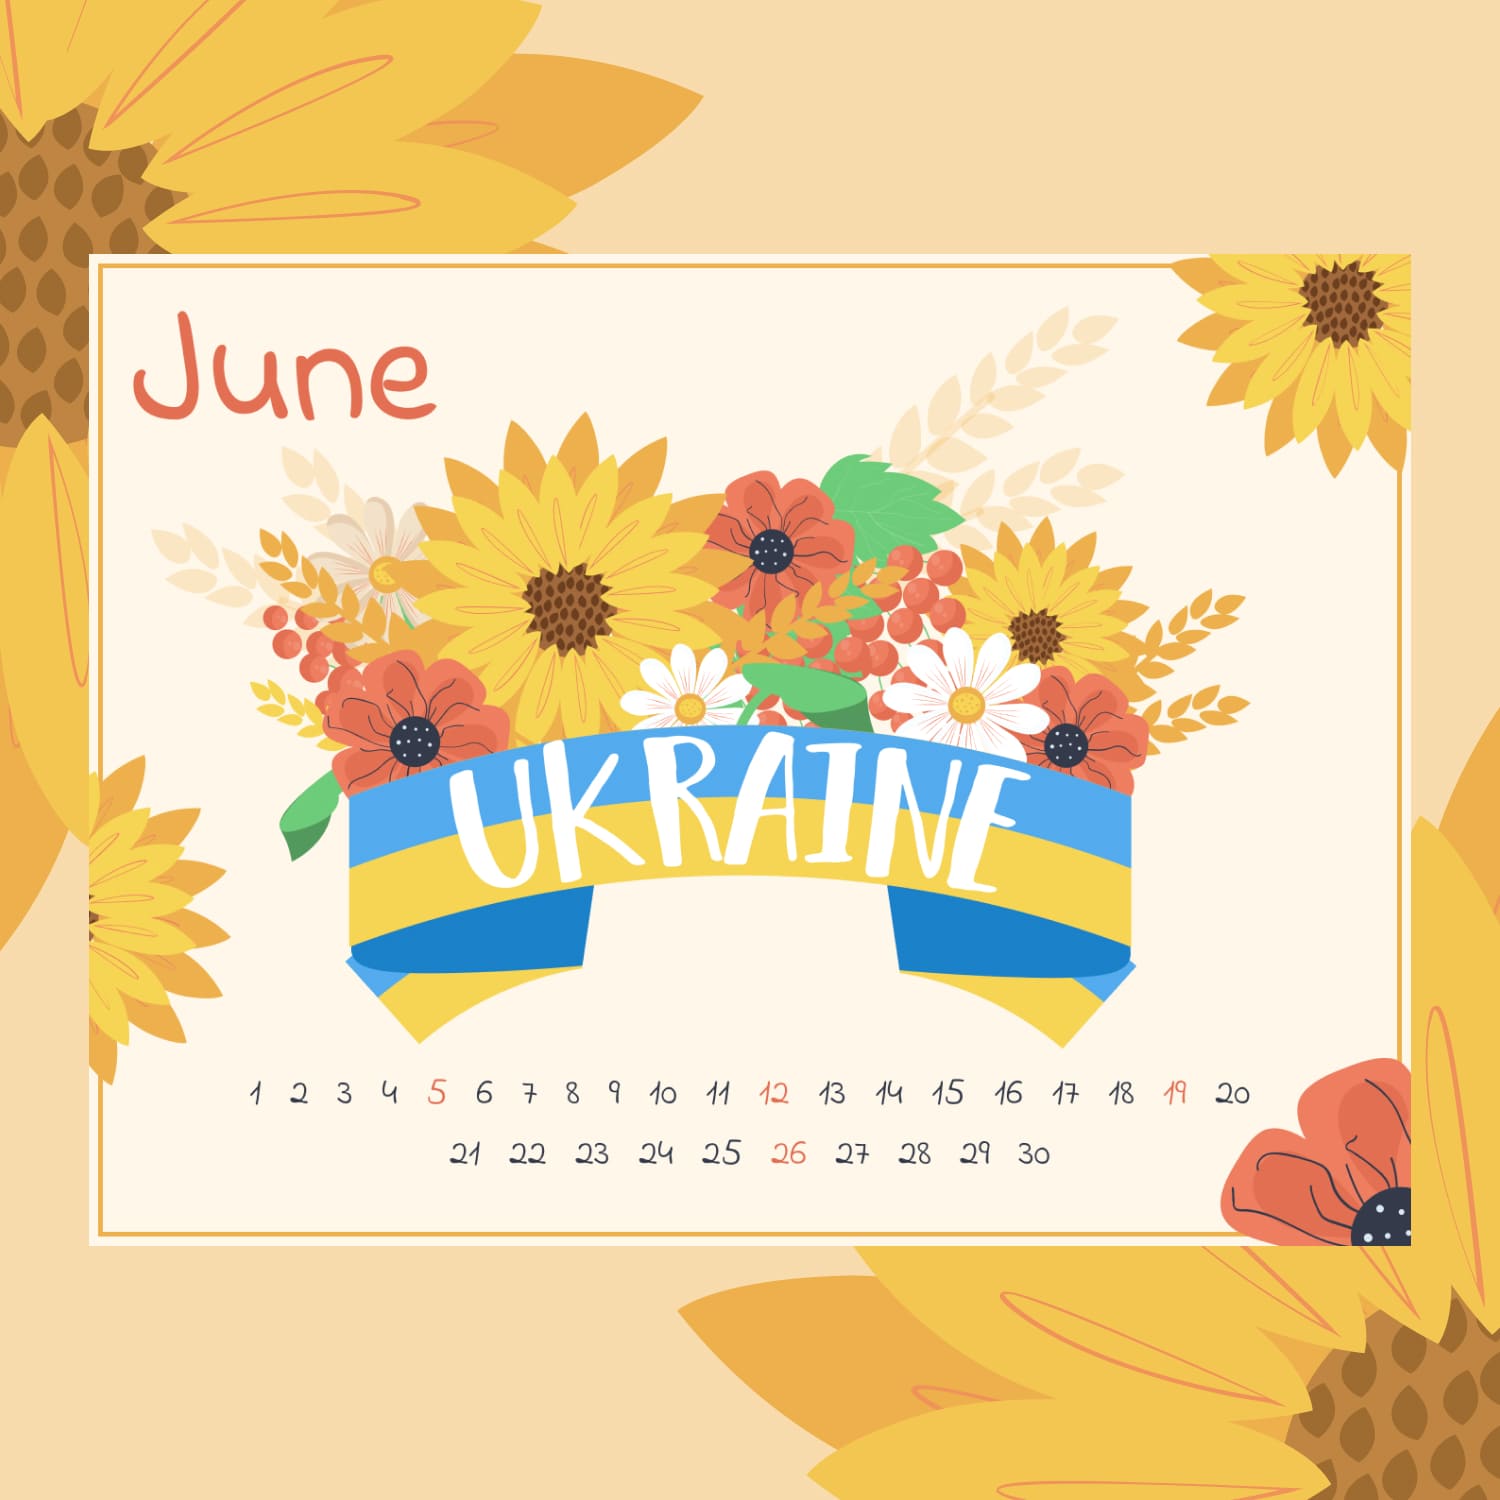 Ukraine Free June Calendar cover.